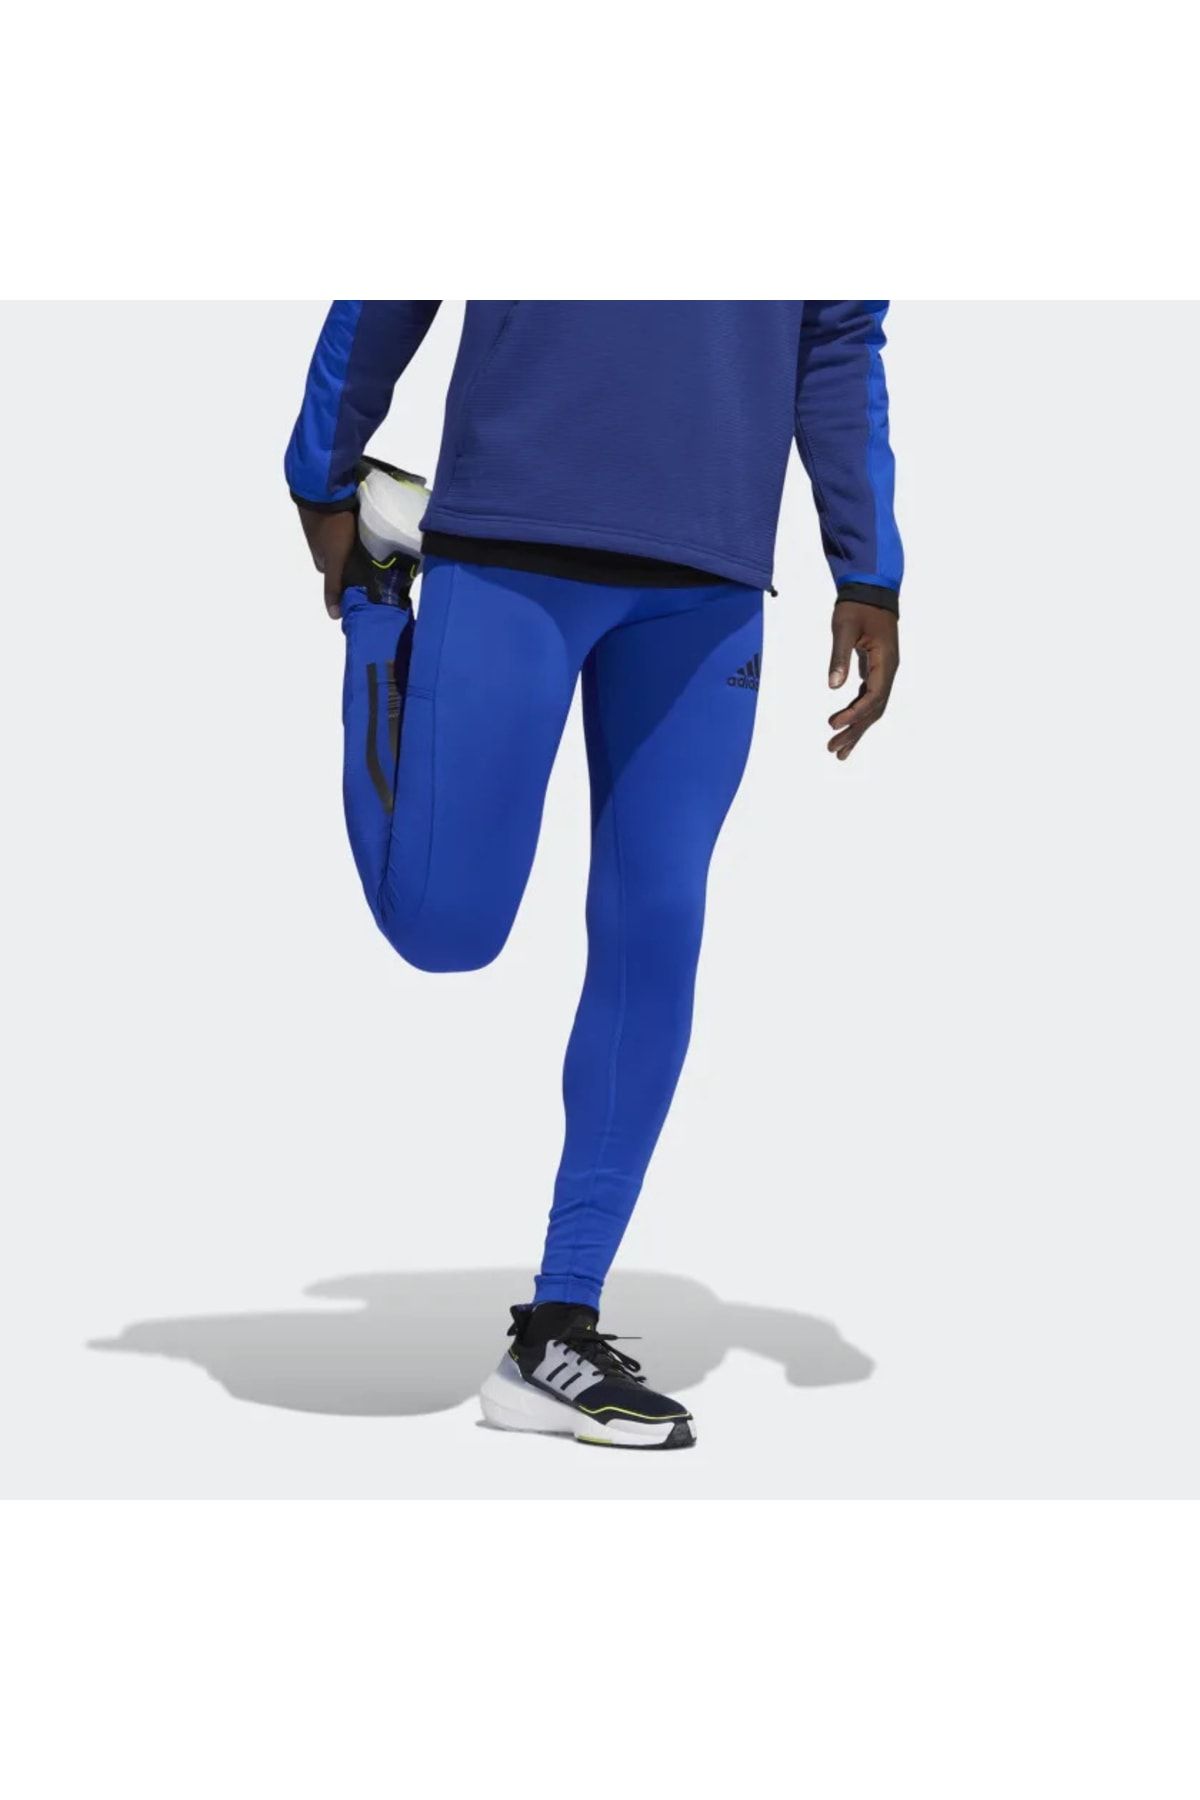 adidas Cold.rdy Techfit Long Blue Gu6376 - Tights Trendyol Men\'s Sports